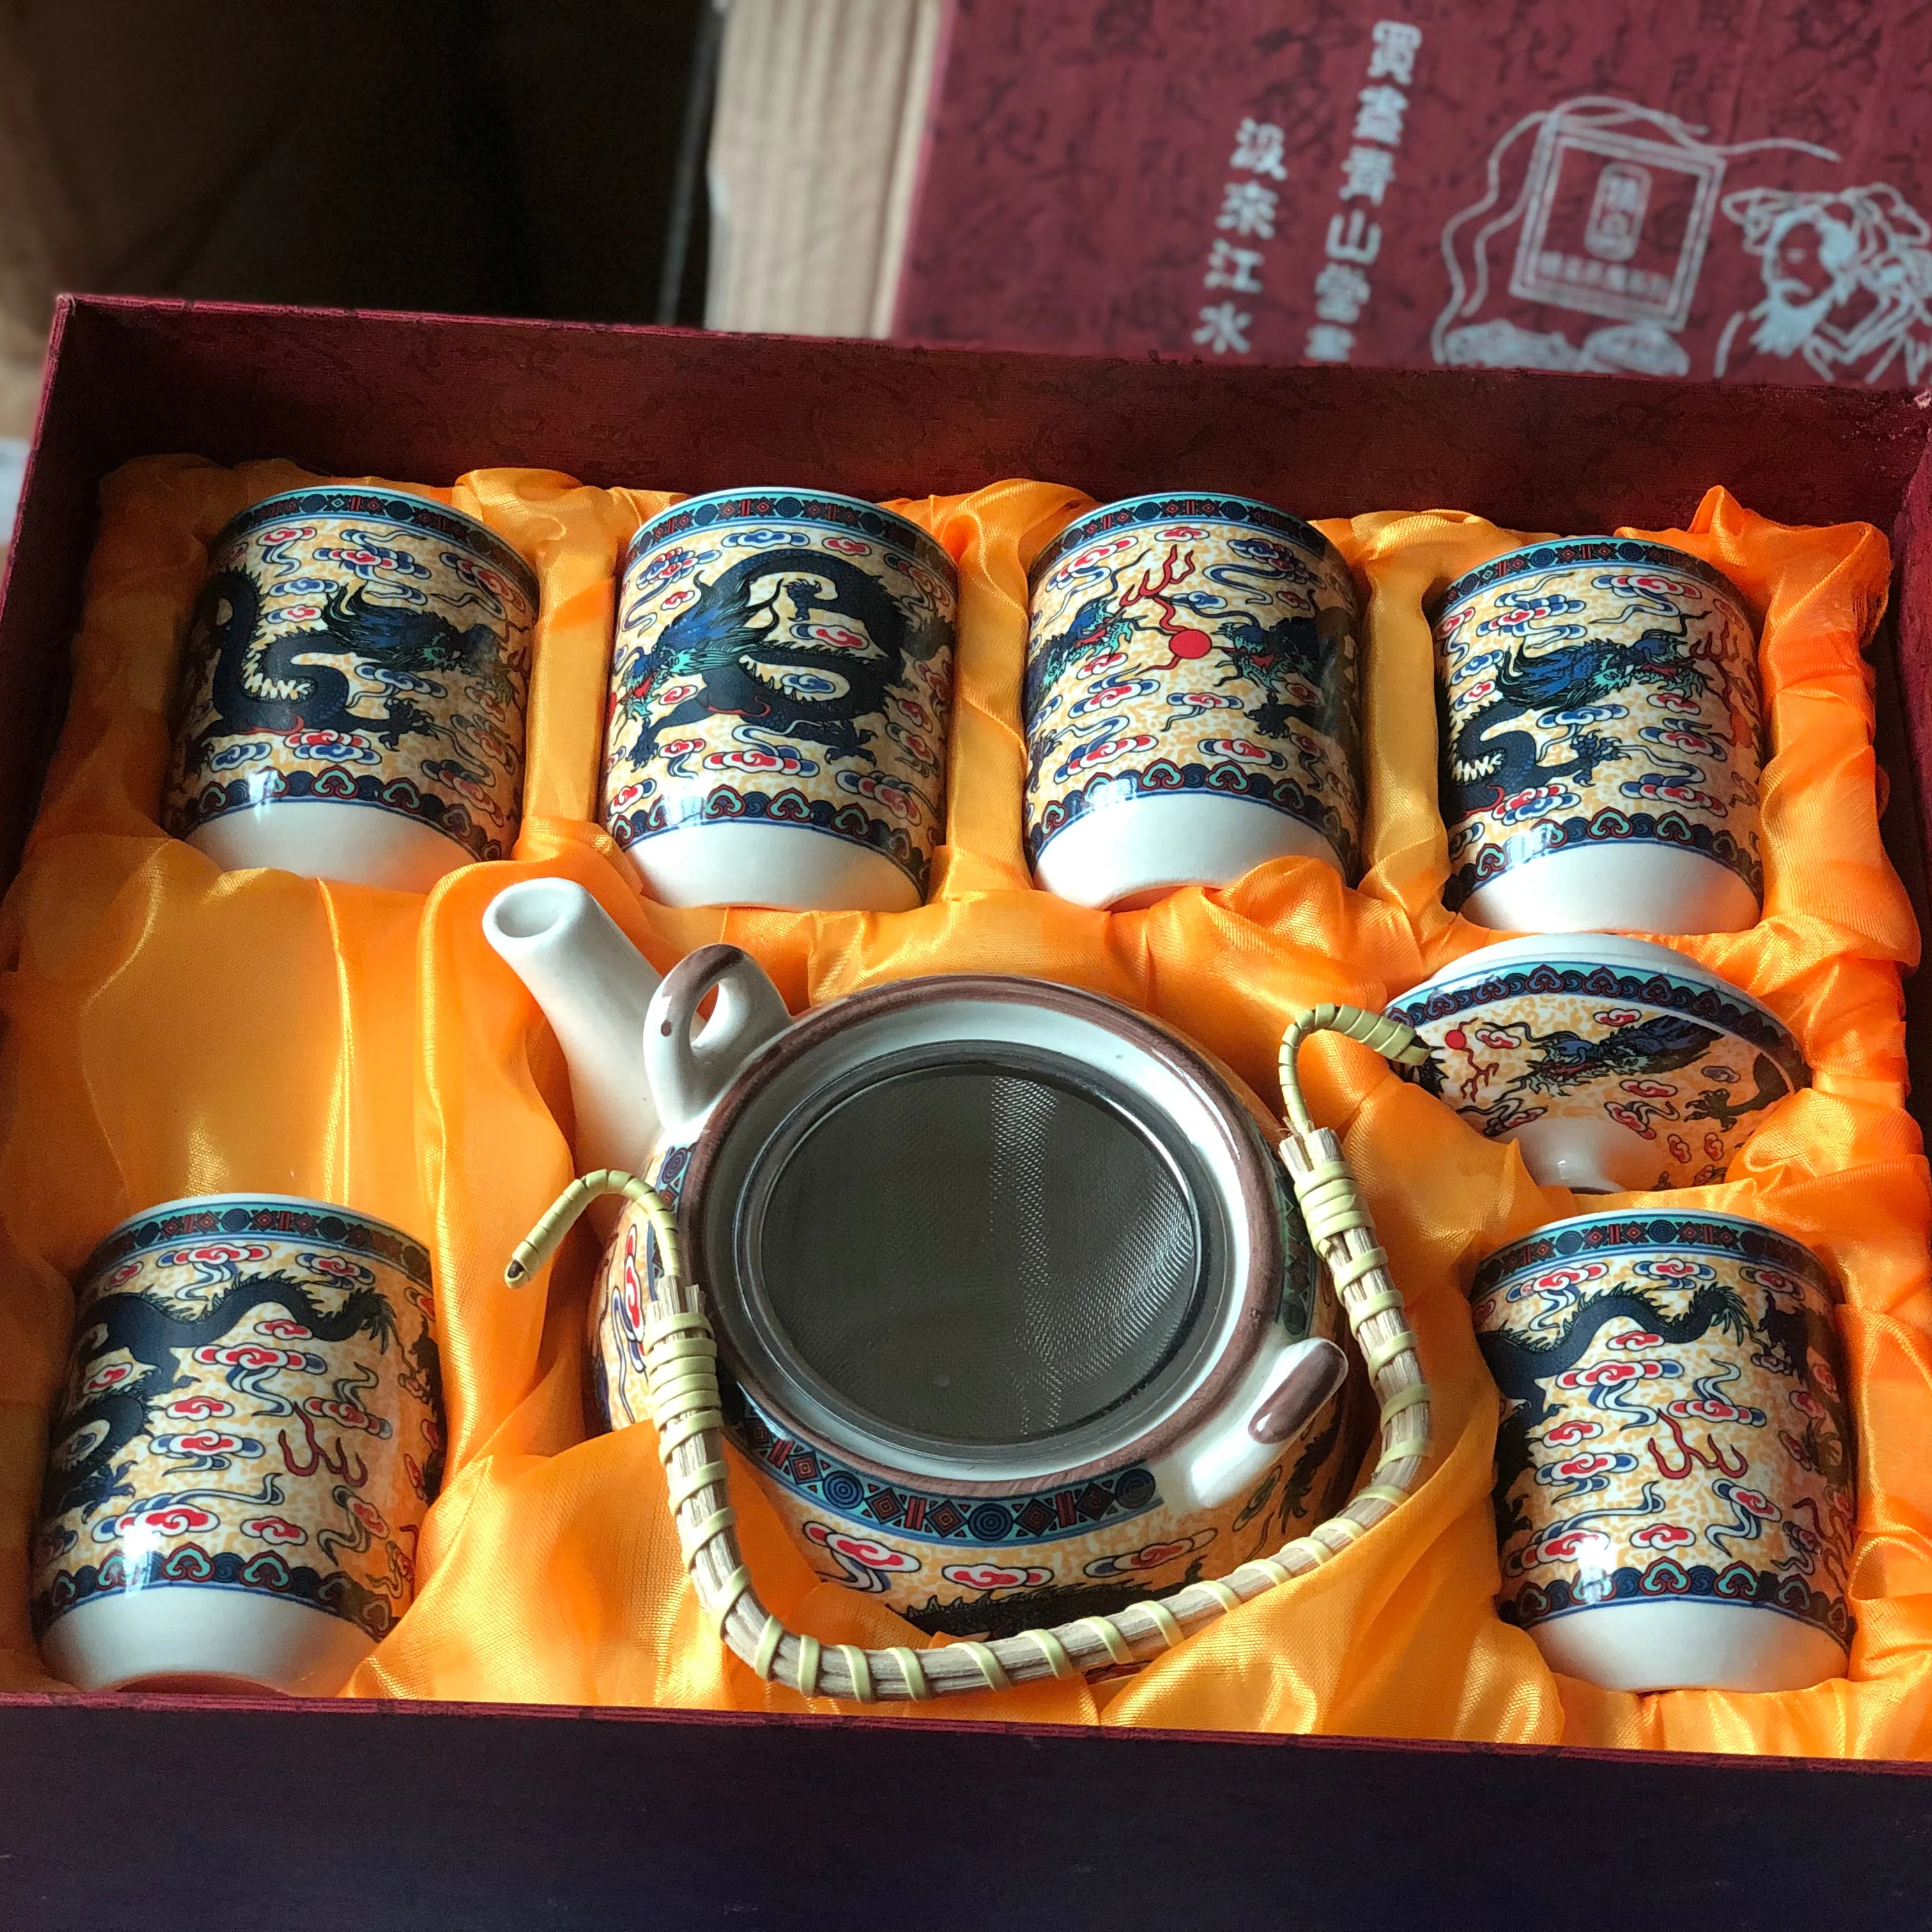 RTS BITING Chinese Classic Tea Set 7pcs Wholesale High Quality Ceramic Teapot And 6 Tea Cups Drinkware Tea Pot Gift Box Packing